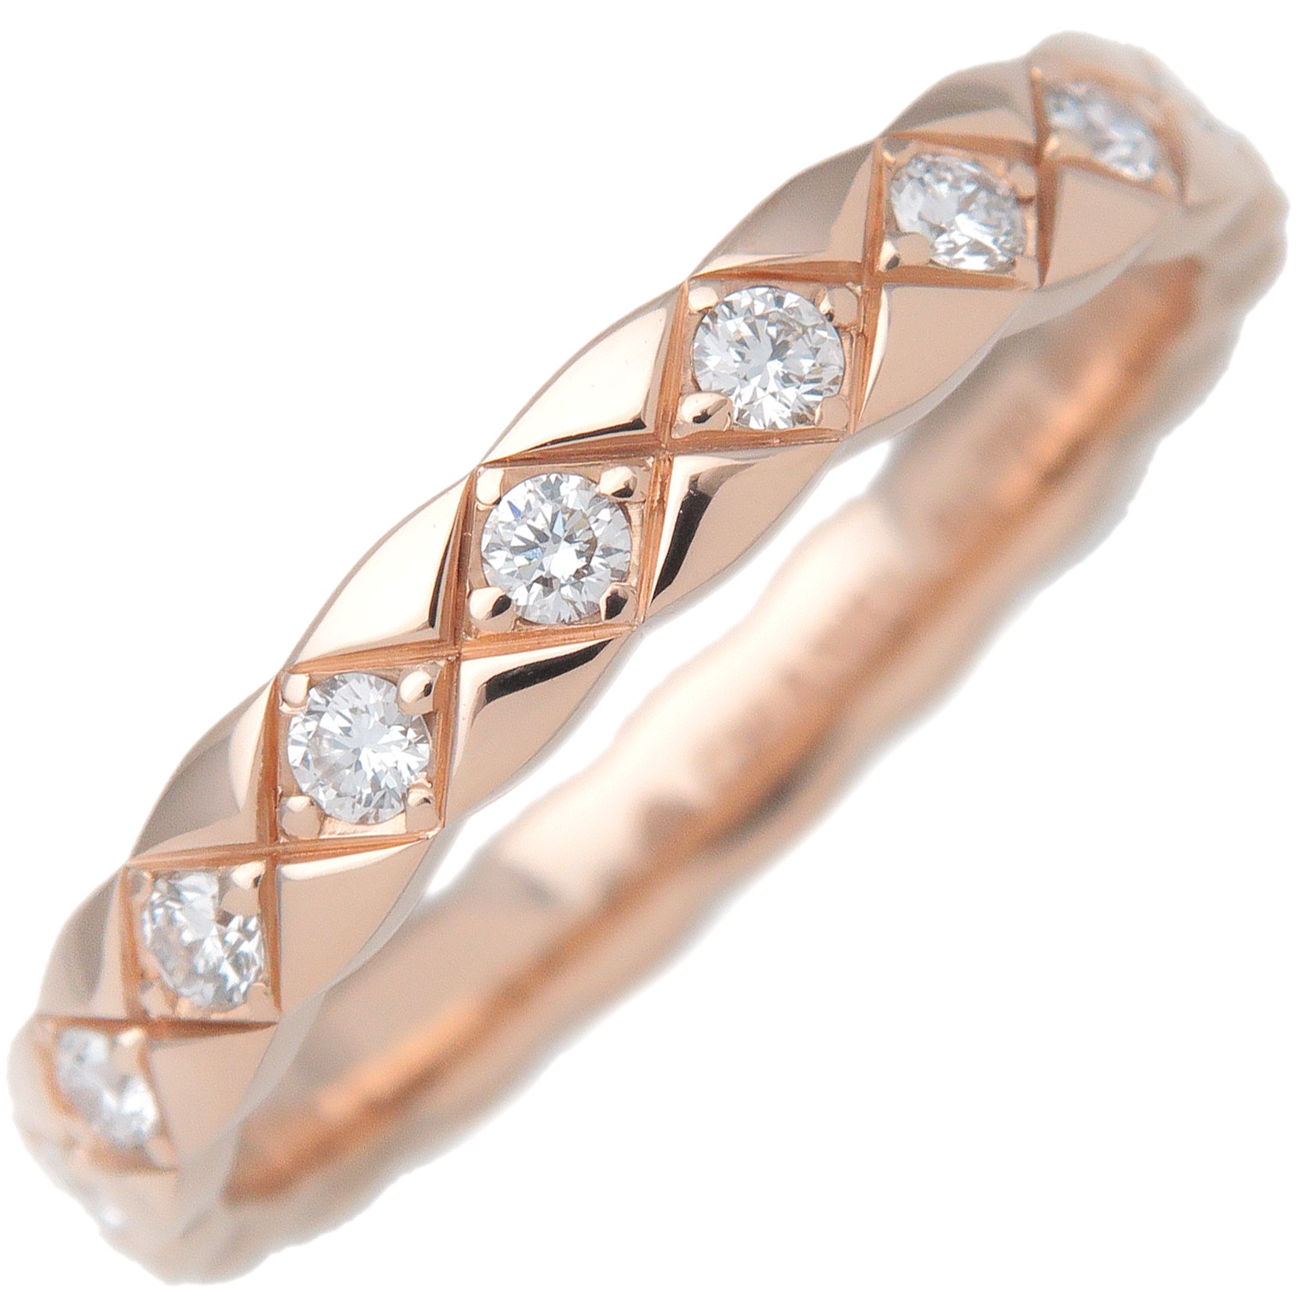 CHANEL-COCO-Crush-Full-Diamond-Ring-K18-Rose-Gold-#54-US6.5-7